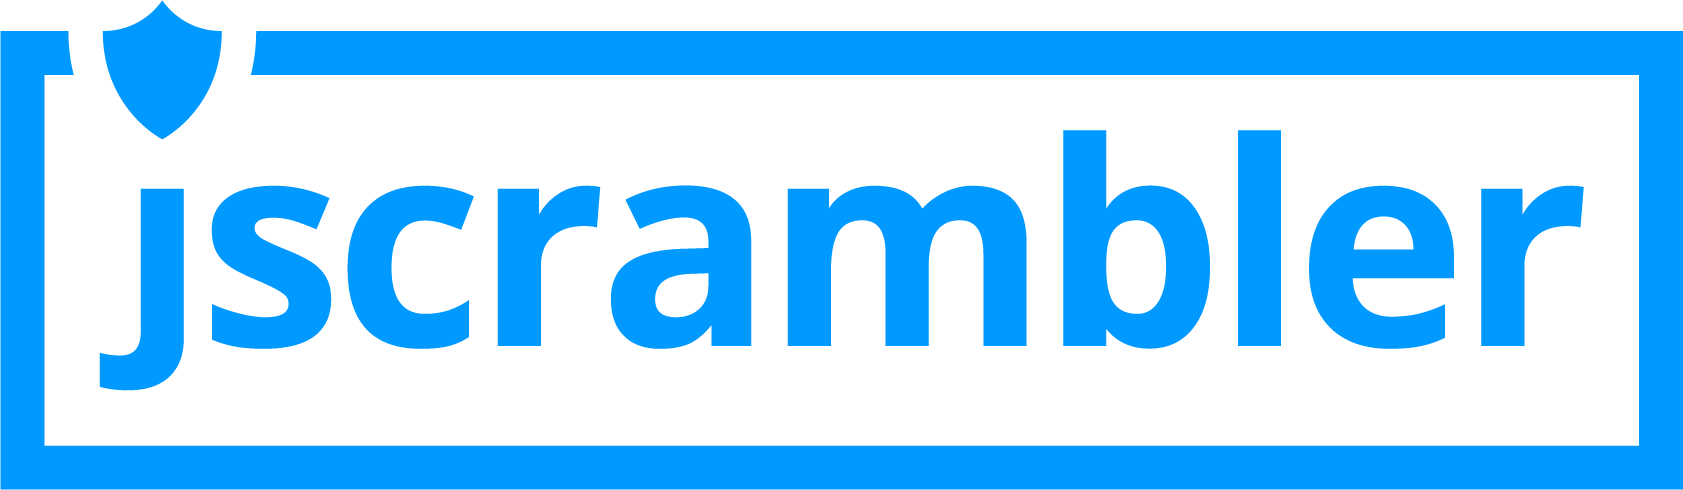 Jscrambler logo.png